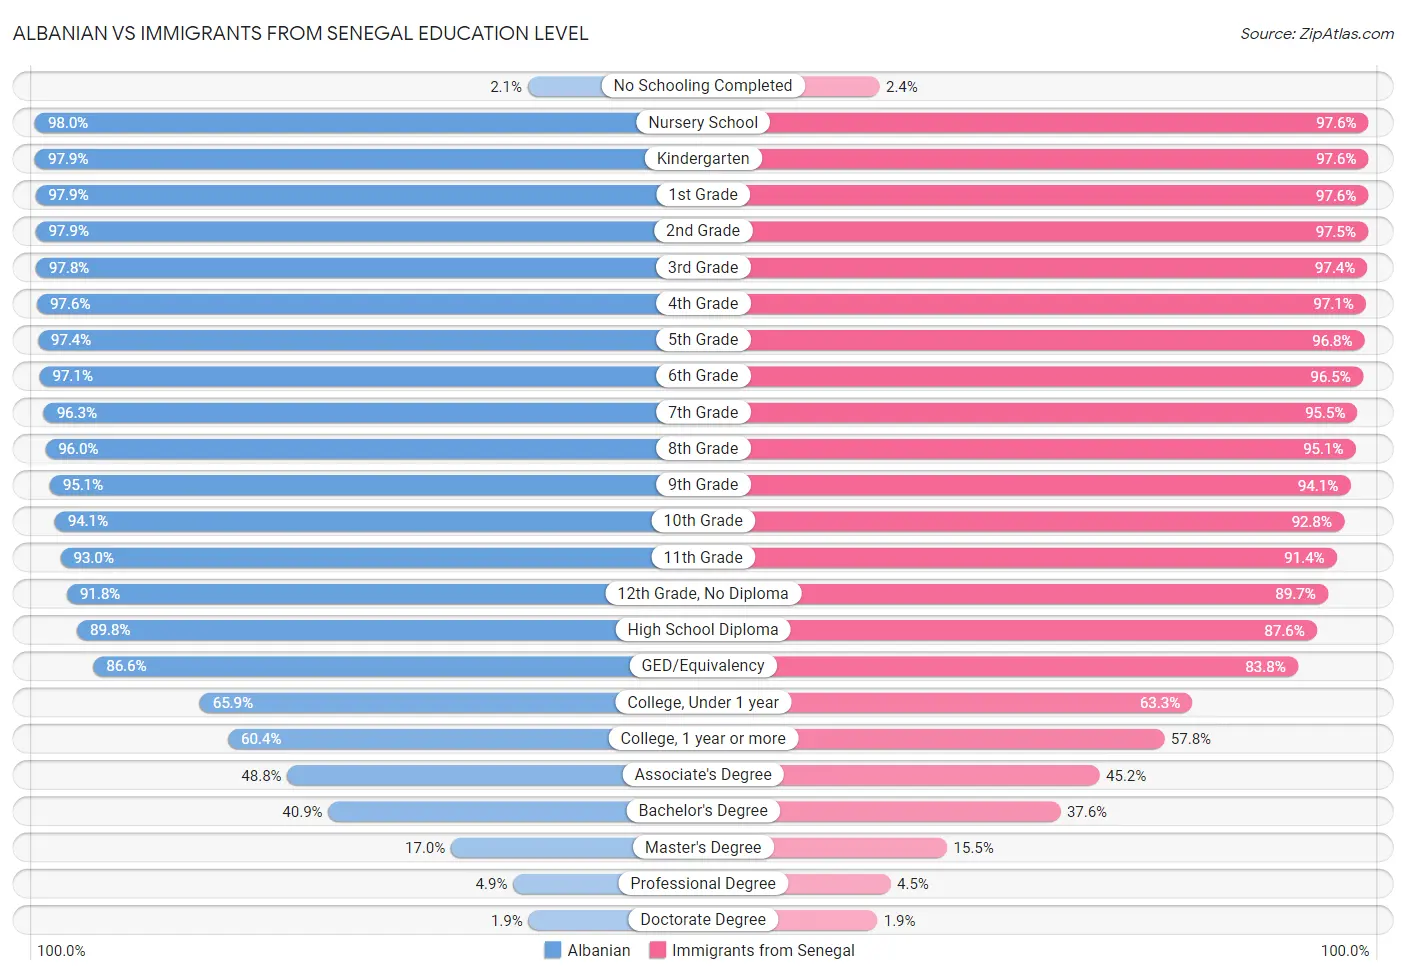 Albanian vs Immigrants from Senegal Education Level